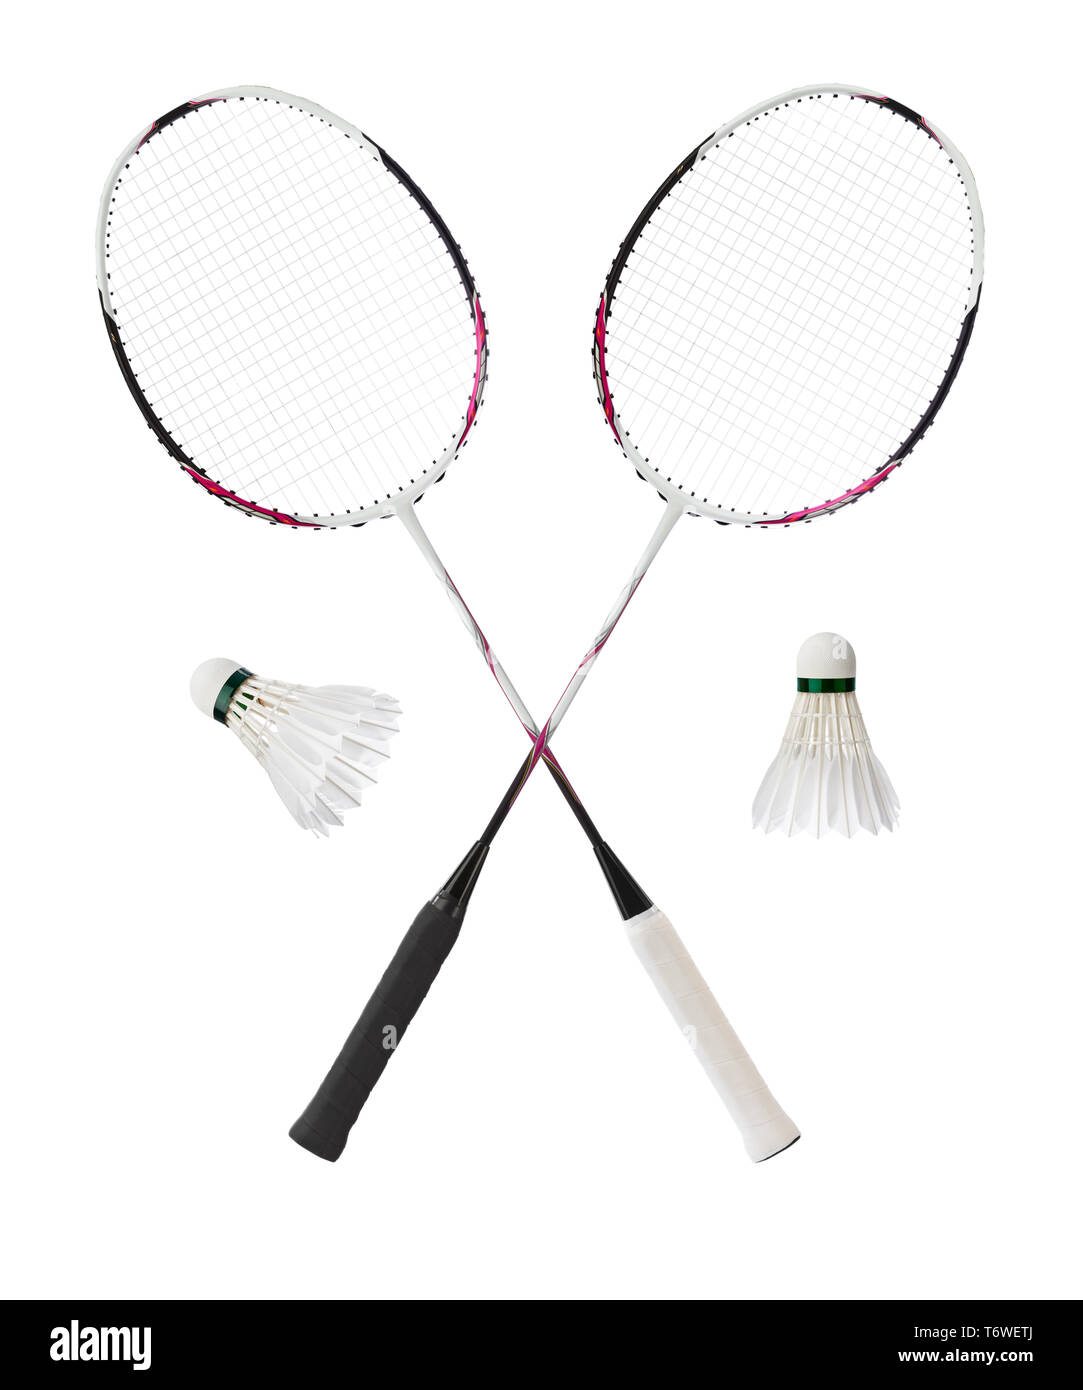 Badminton rackets and feather shuttlecocks Stock Photo - Alamy